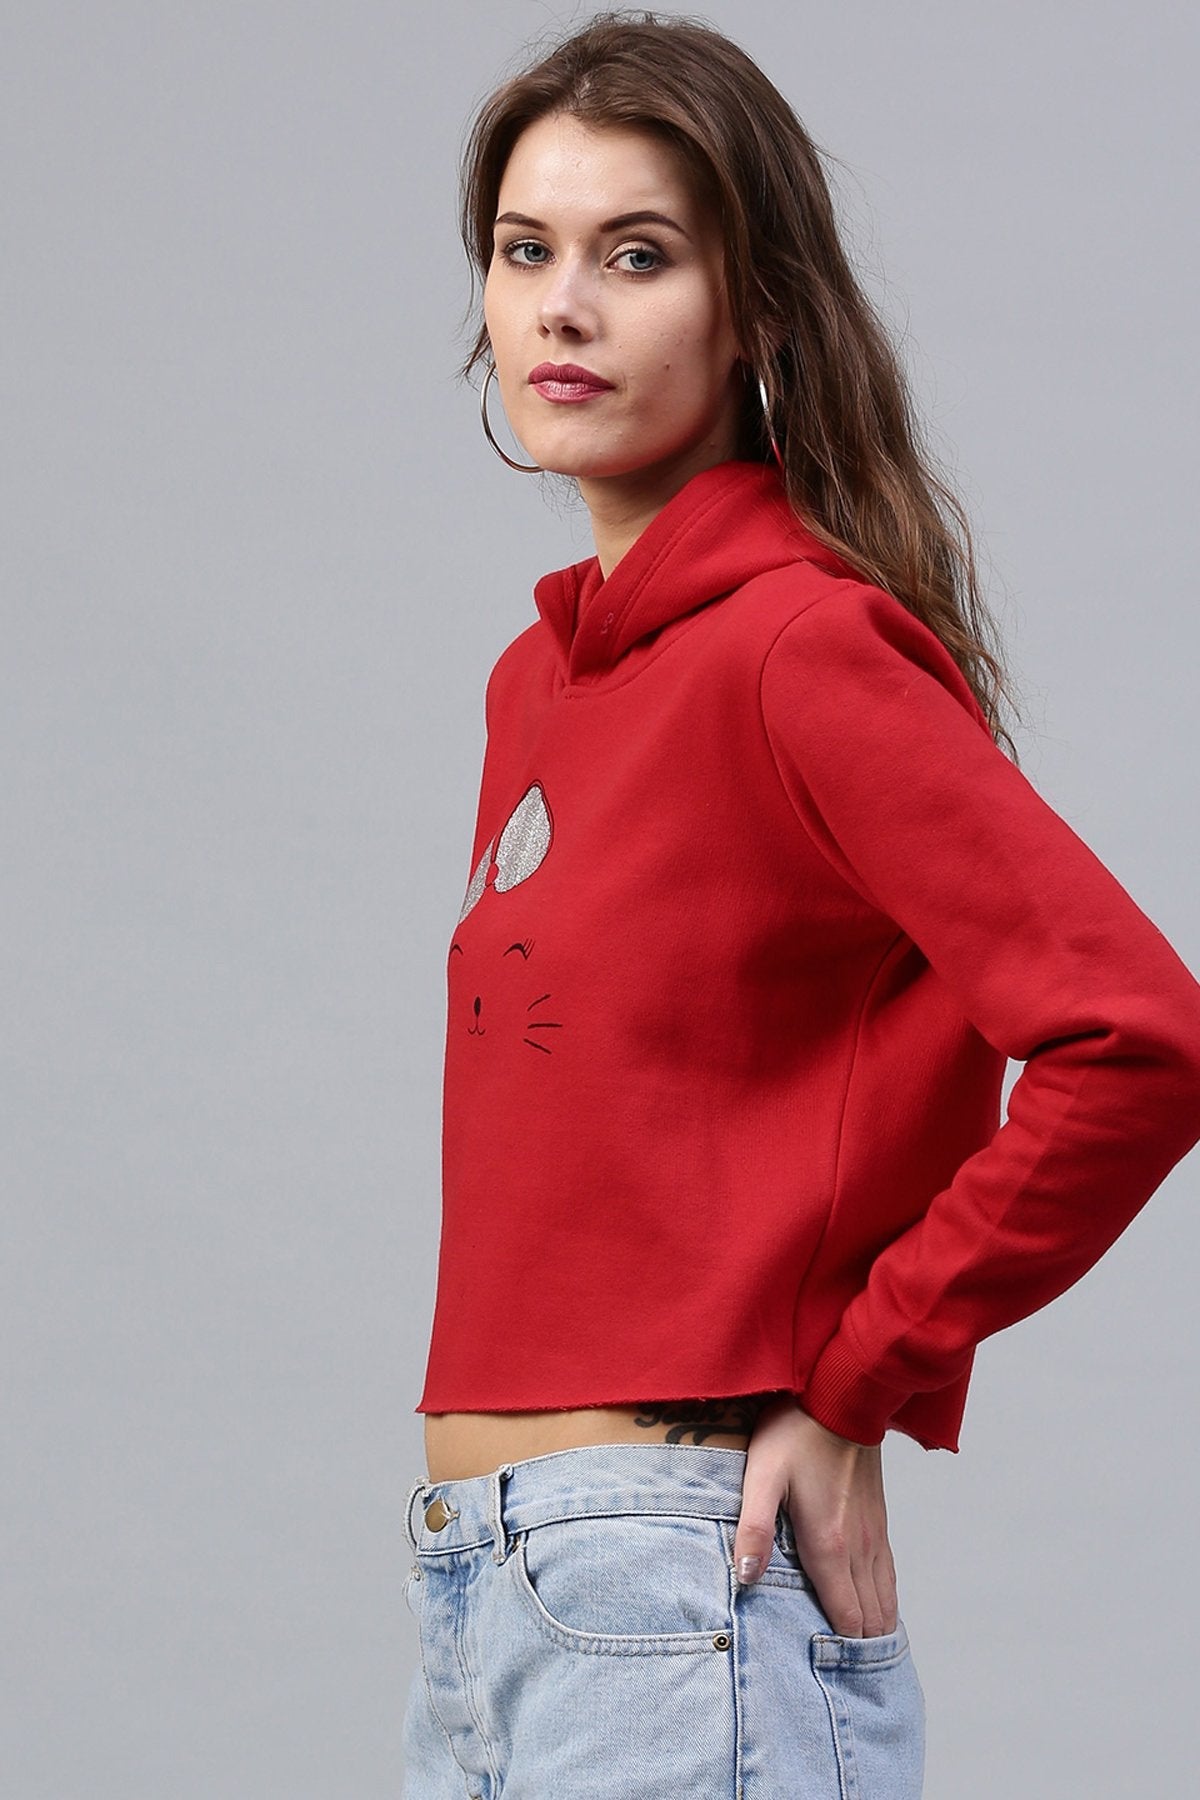 Women's Bow Kitty Red Sweatshirt - SASSAFRAS